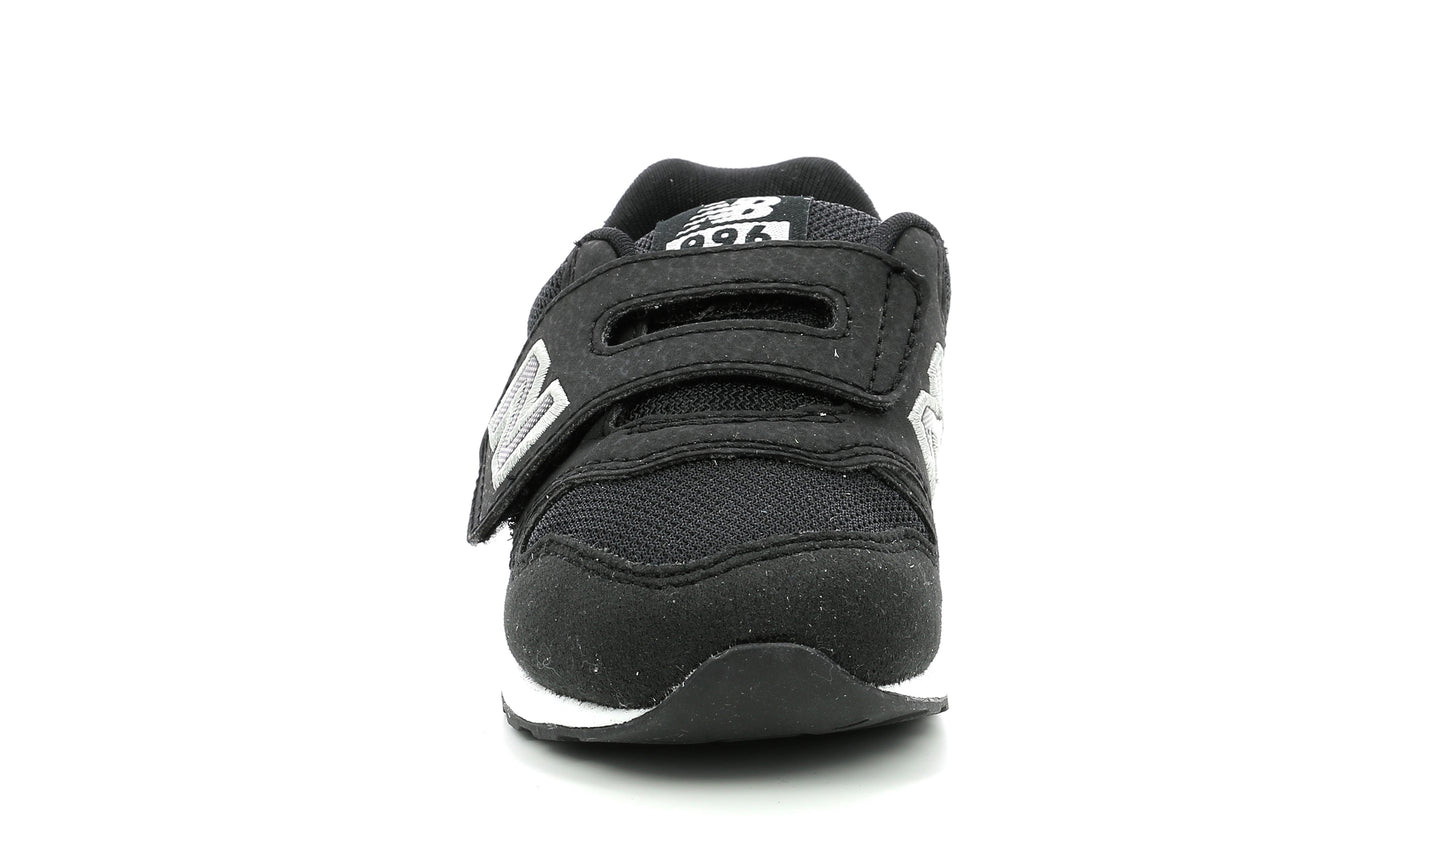 NEW BALANCE IZ996 M HBK Chaussures Basses Baskets Sneakers